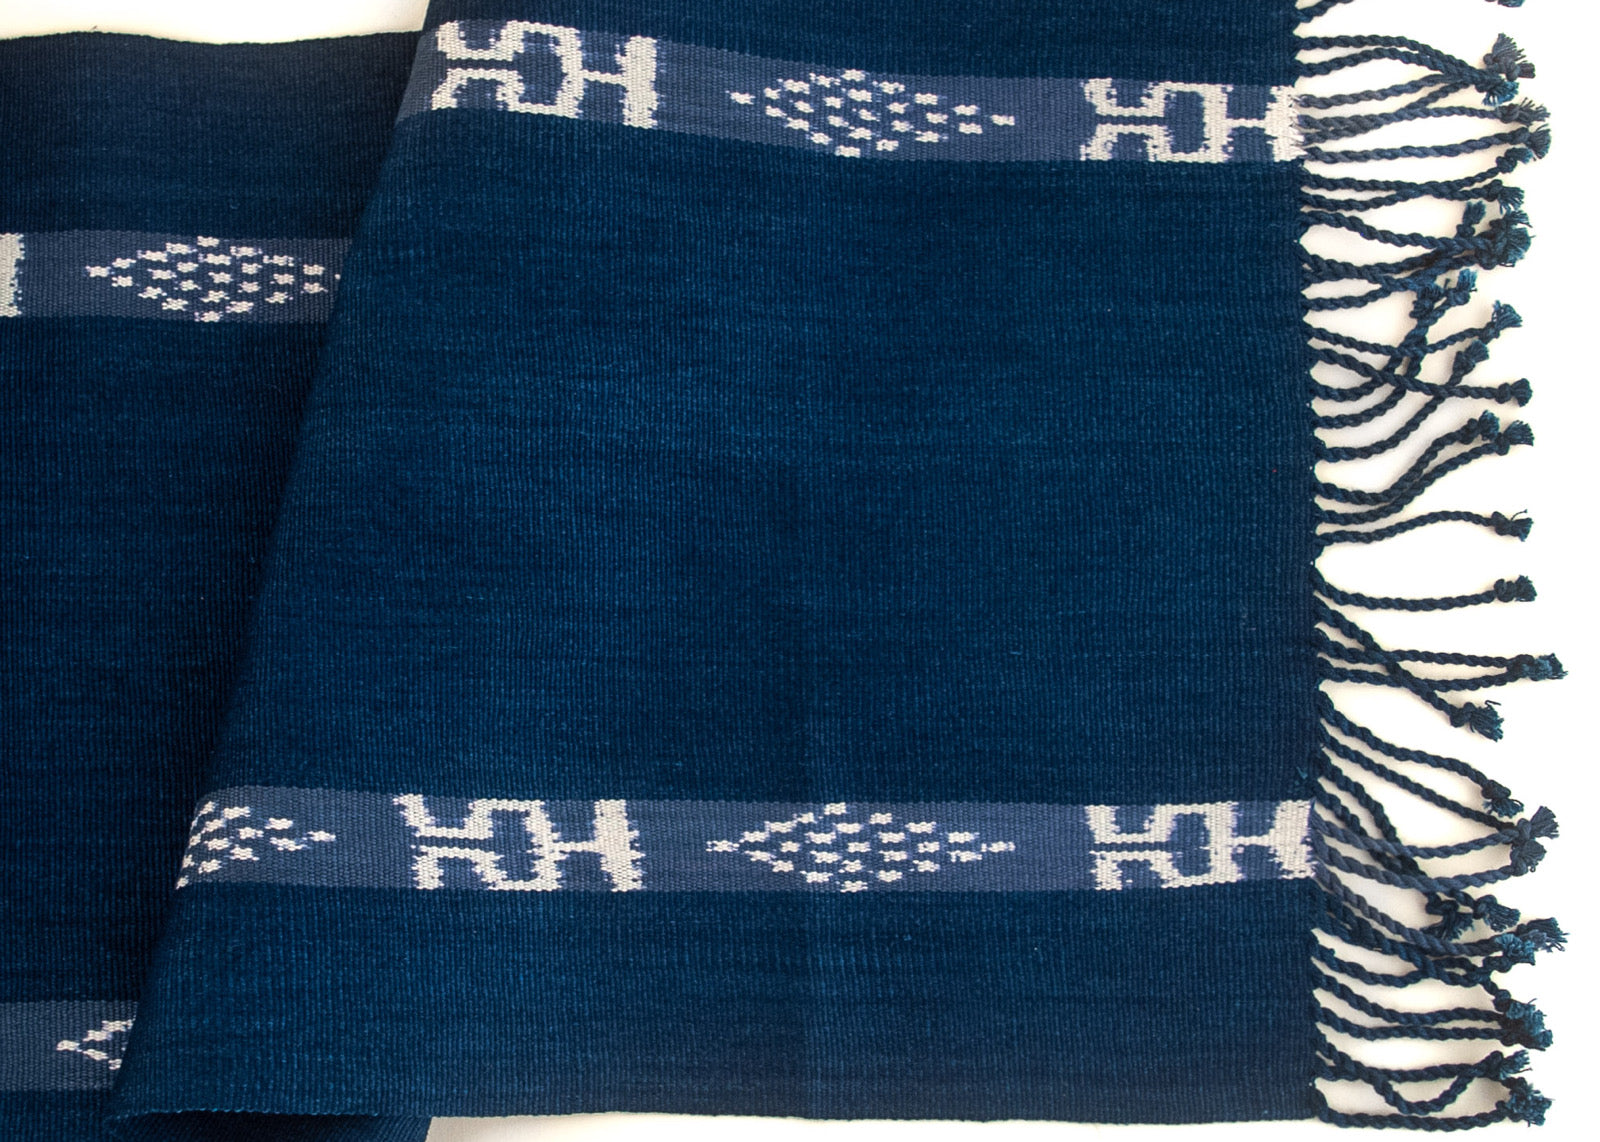 Close-up image of an indigo blue textile featuring Jaspe ikat geometric designs